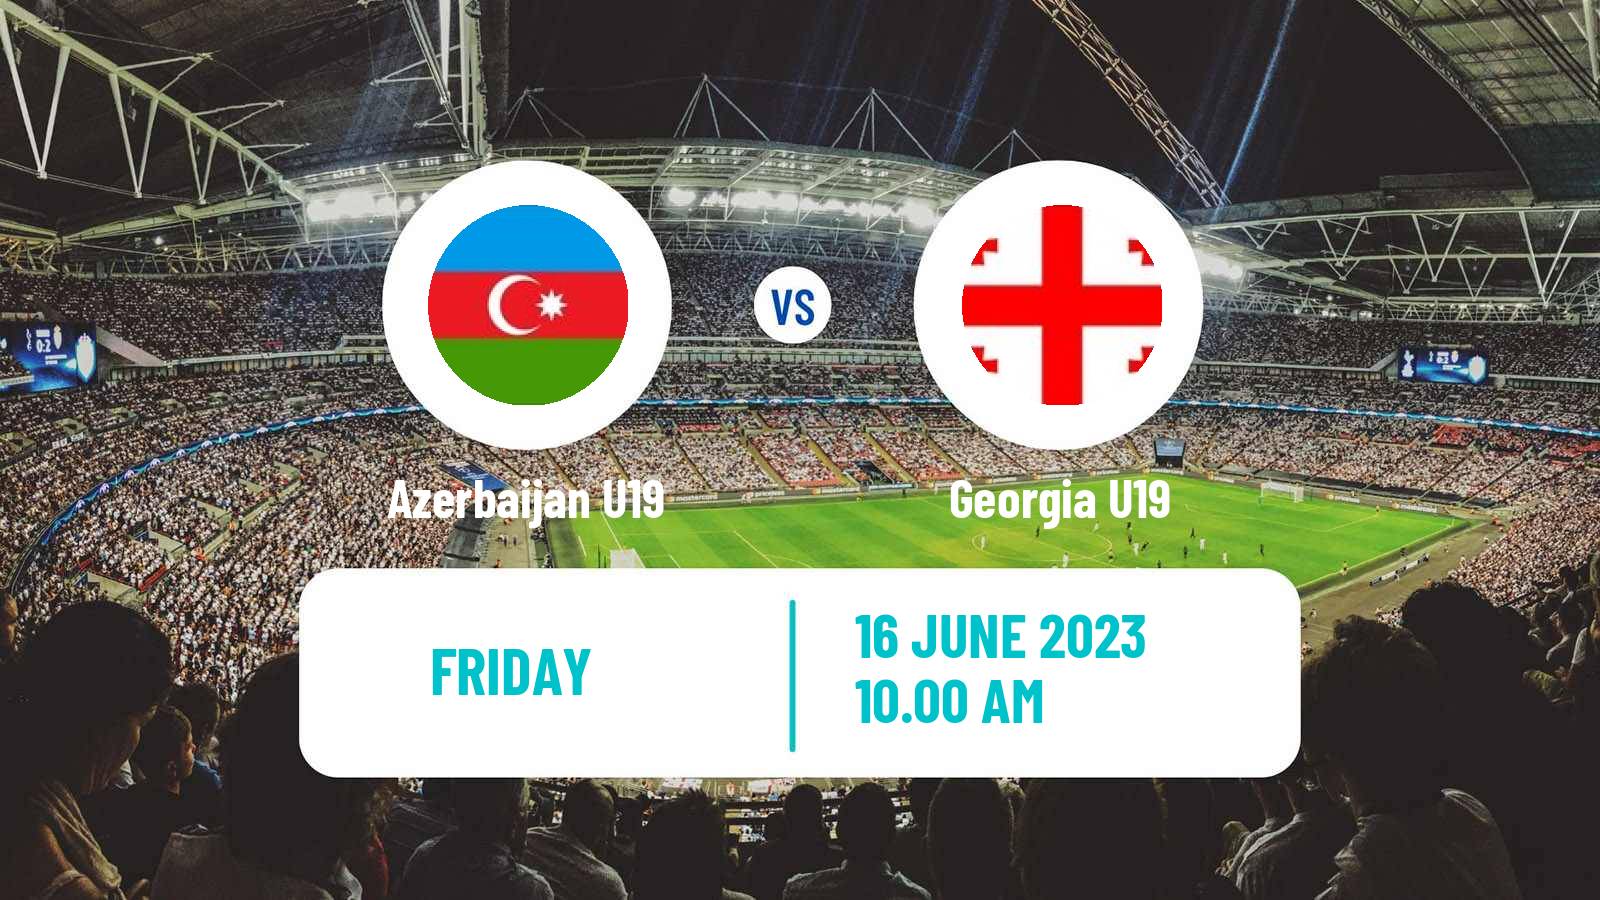 Soccer Friendly Azerbaijan U19 - Georgia U19